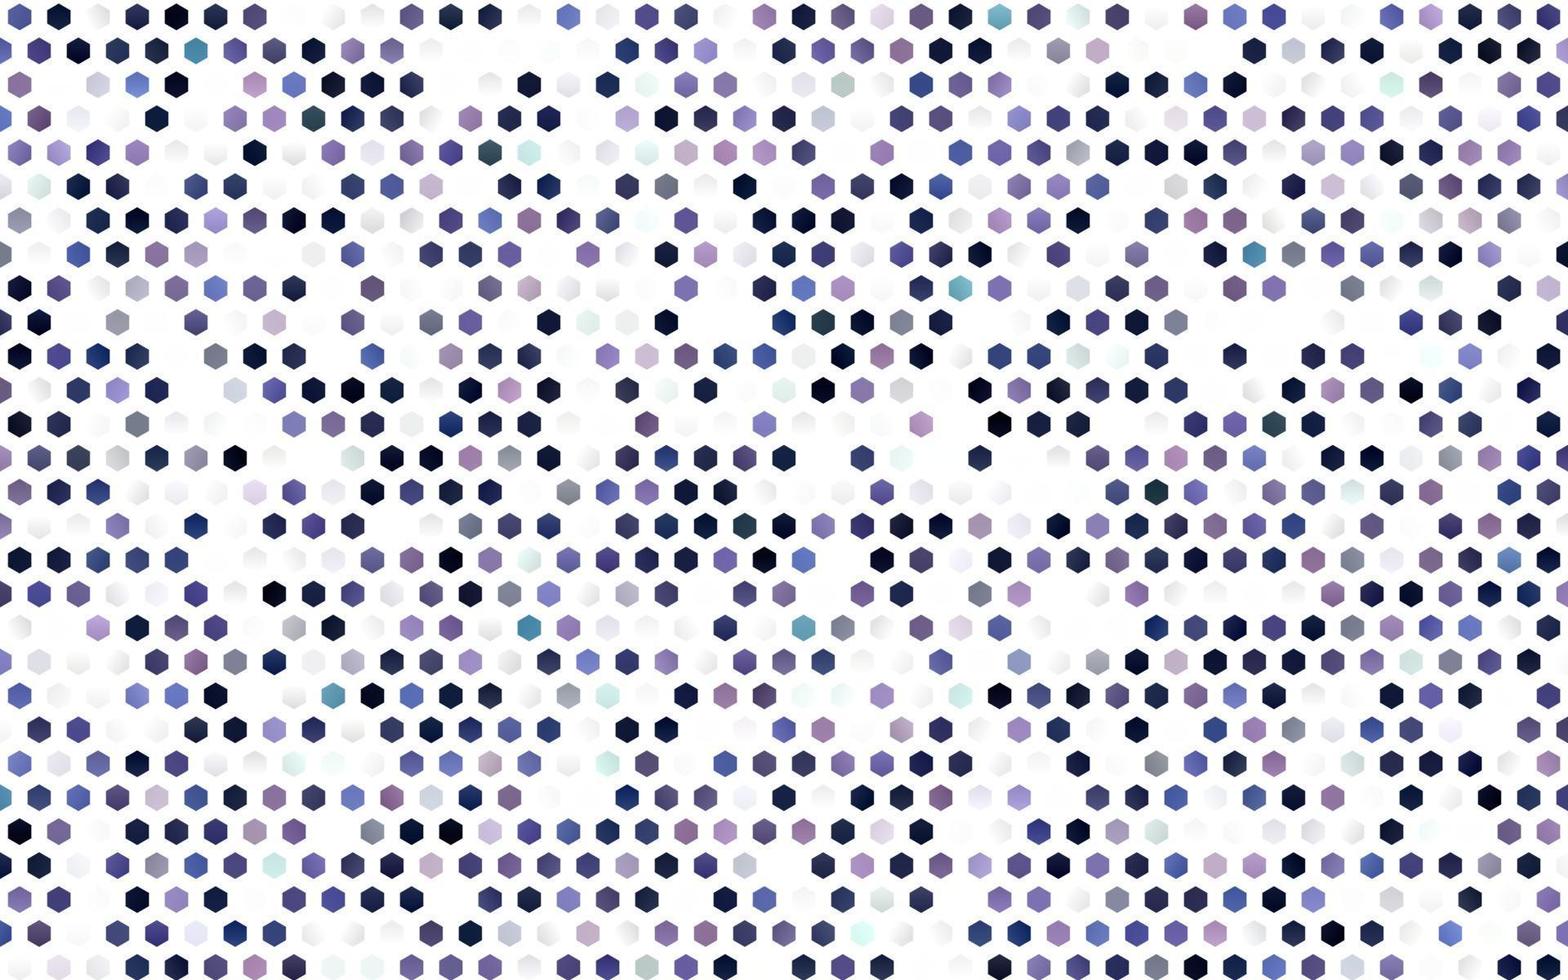 mörk lila vektor bakgrund med hexagoner.